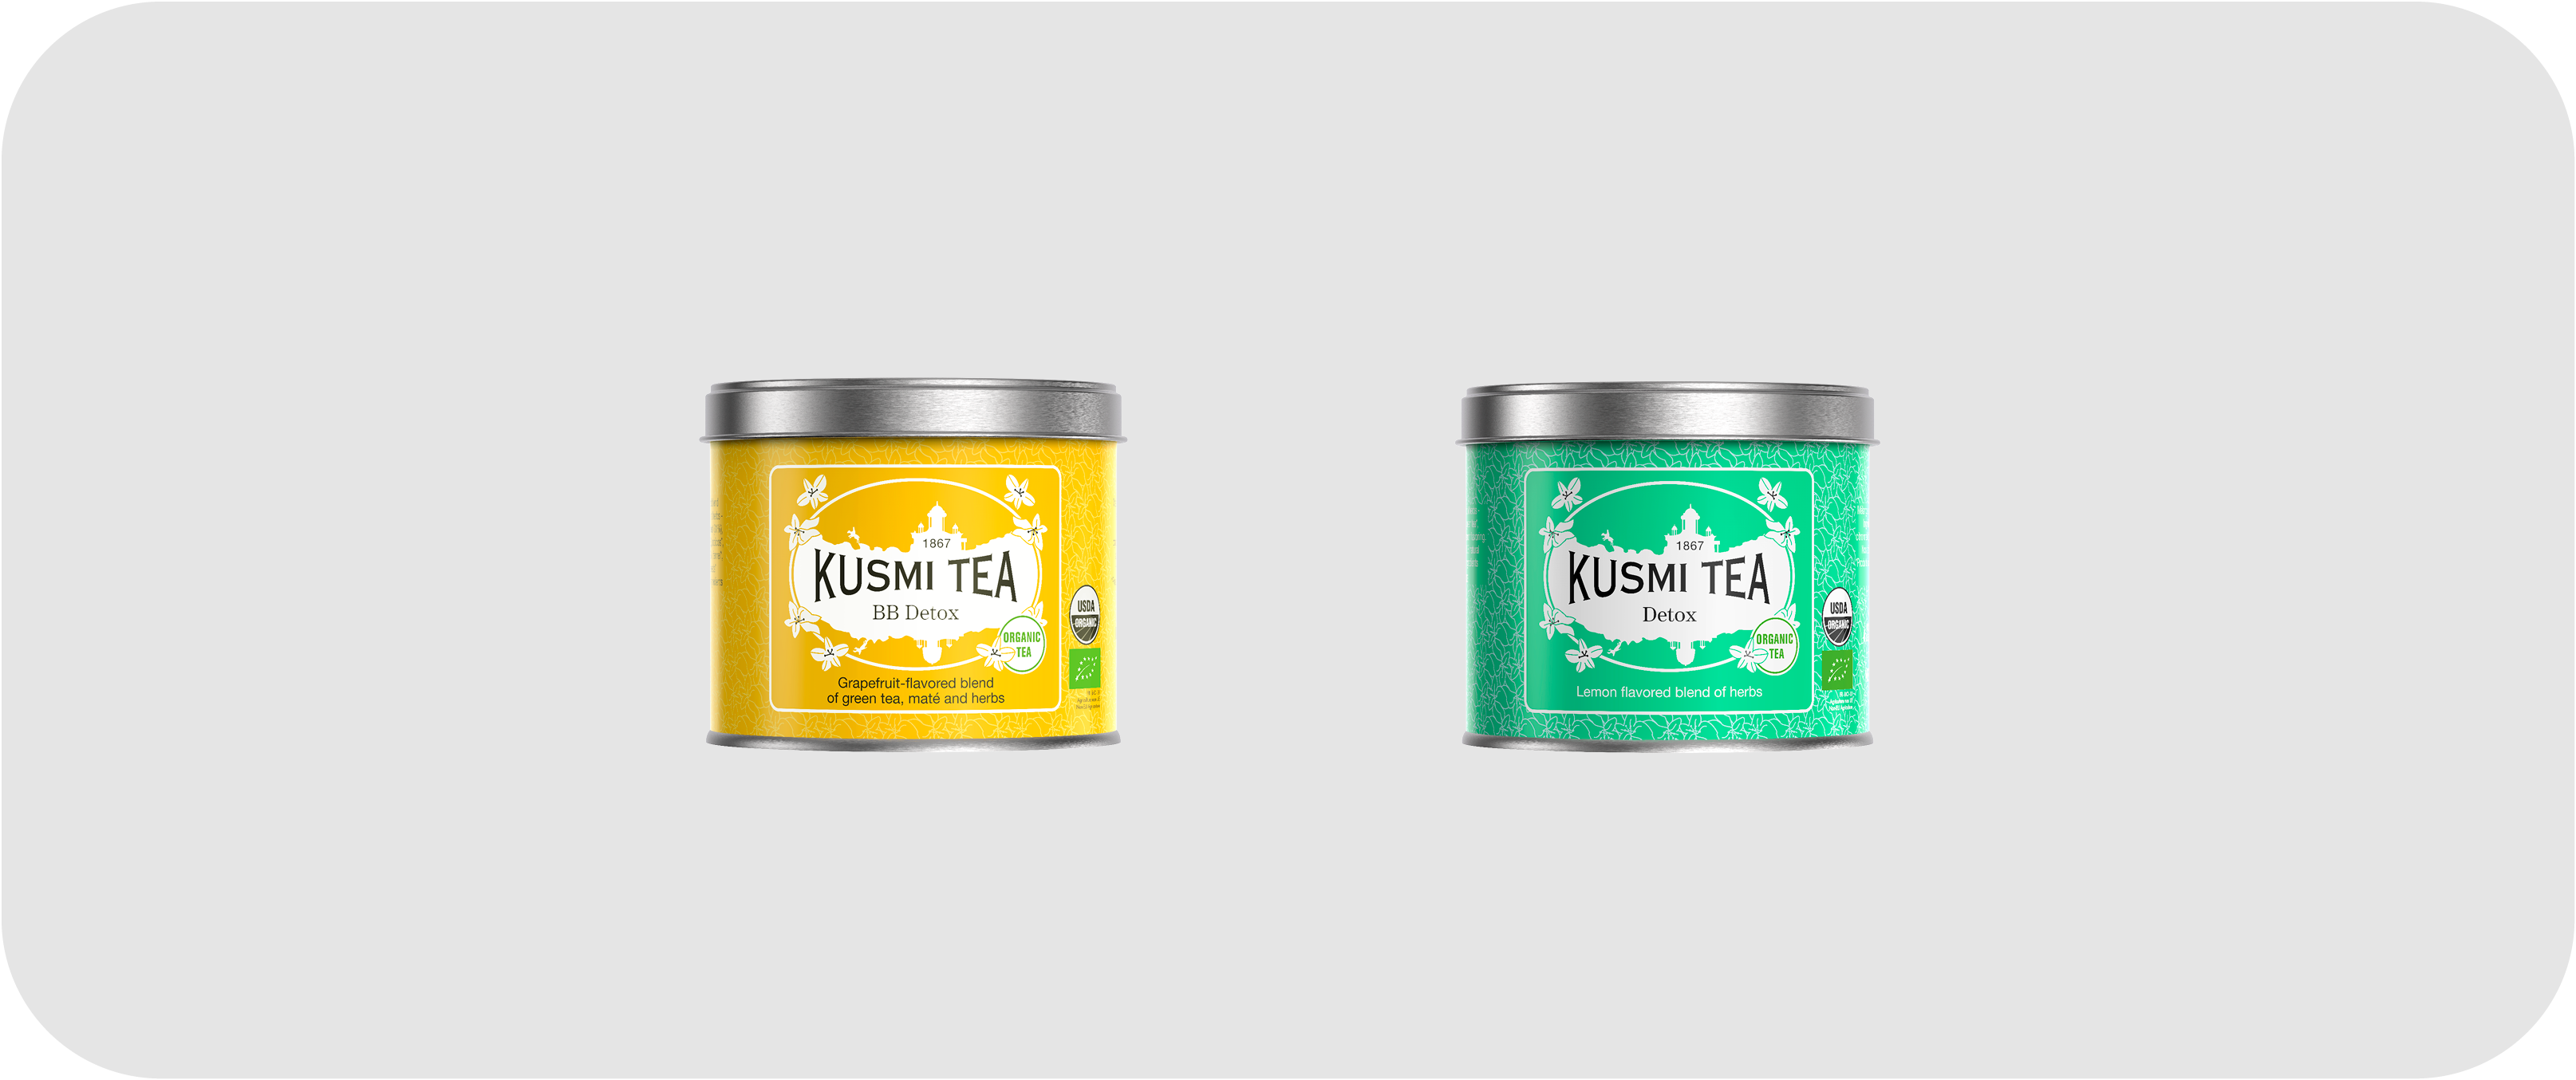 Kusmi Tea Wellness Gift Set - Five Loose Teas in Miniature Tins - Flavored  Blends of Green, Mate & Herbal Teas - Includes Detox, BB Detox, Boost